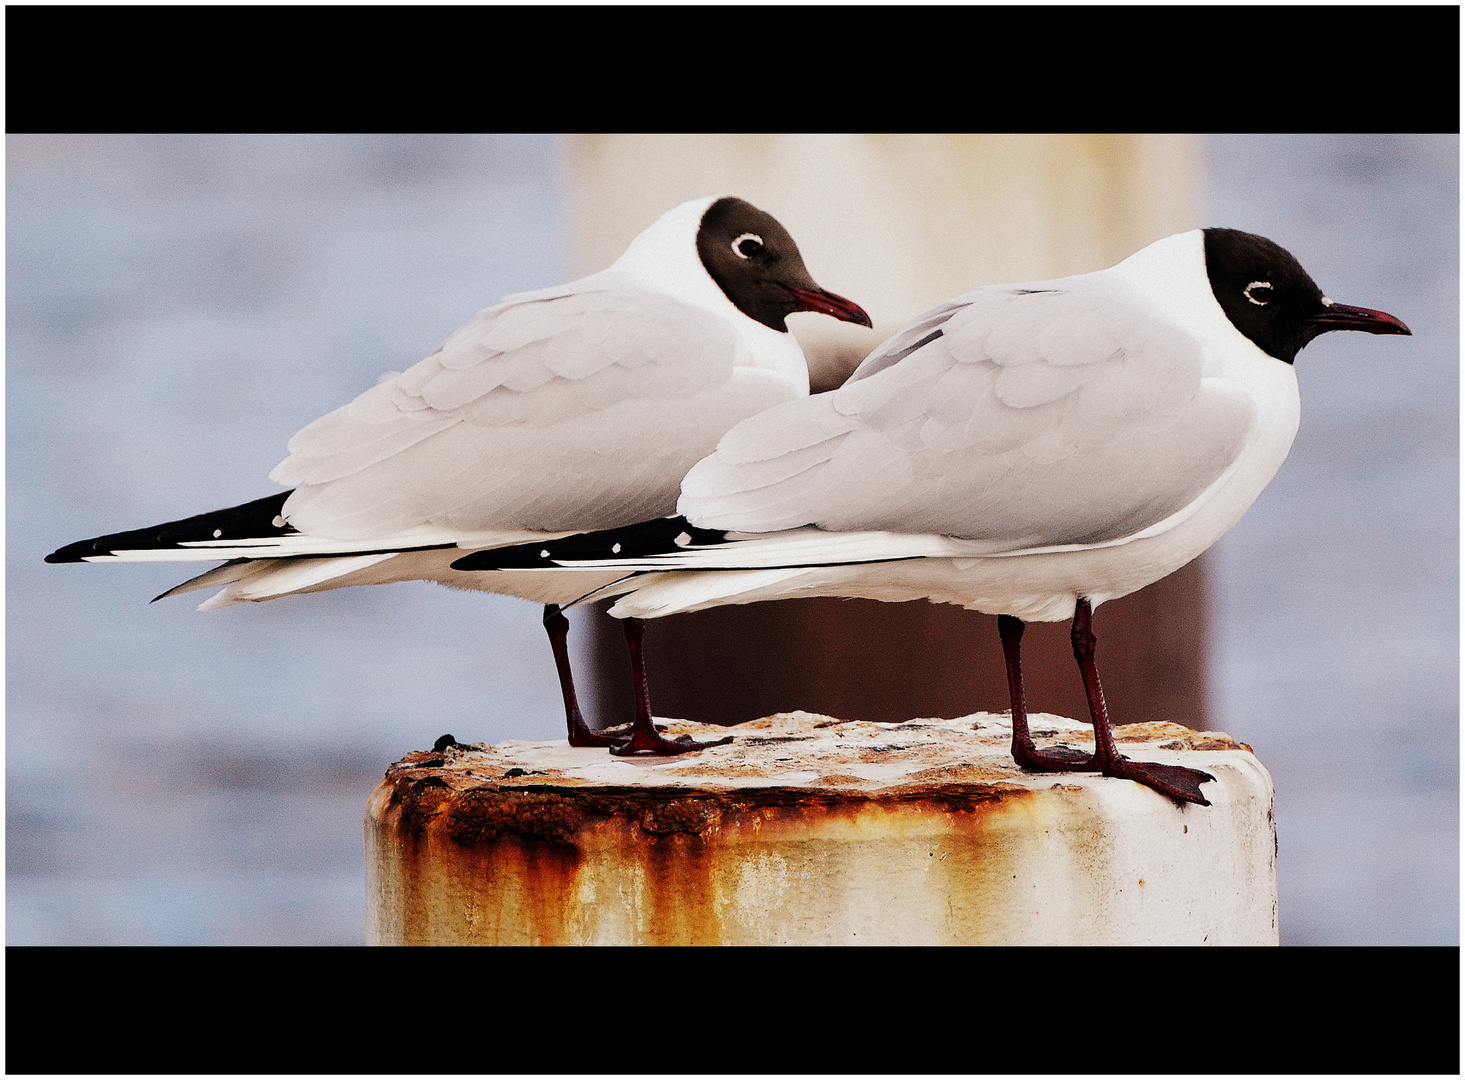 Lachmöwen, black-headed gulls